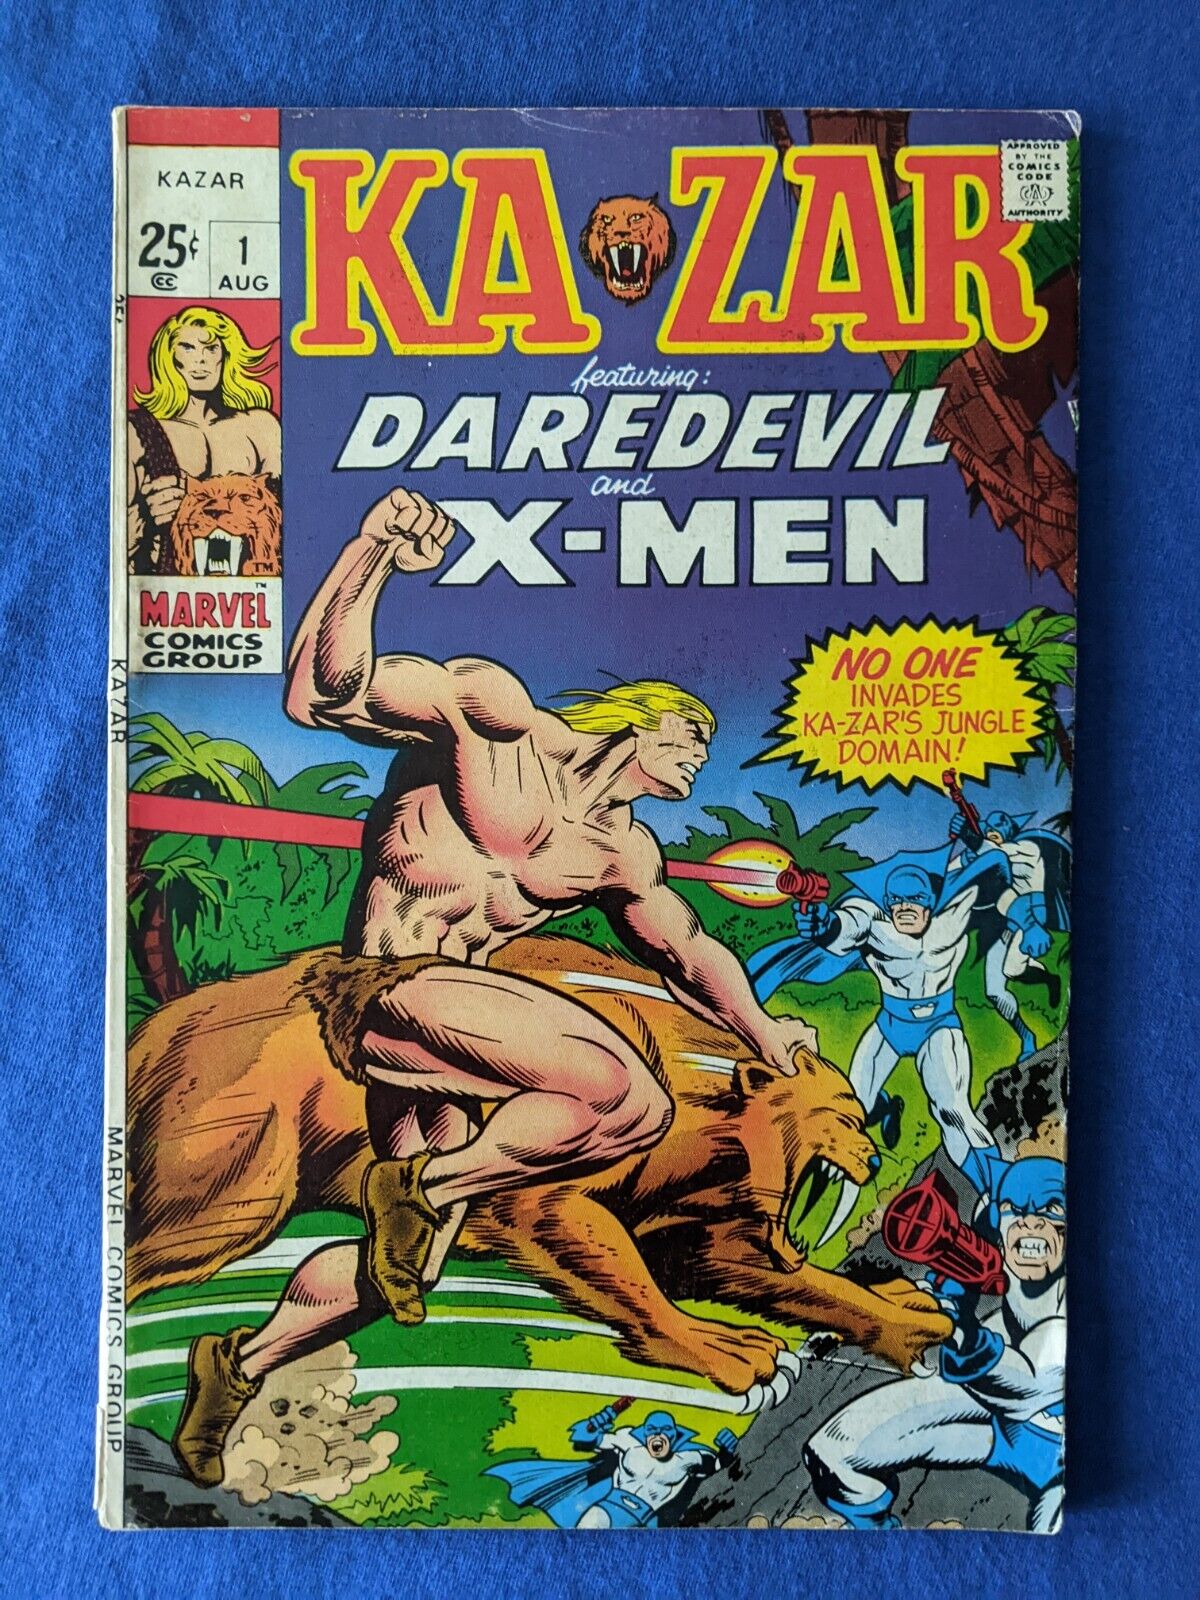 KA-ZAR #1 (Aug 1970) Marvel Bronze age key, X-Men, Daredevil, hidden curse word